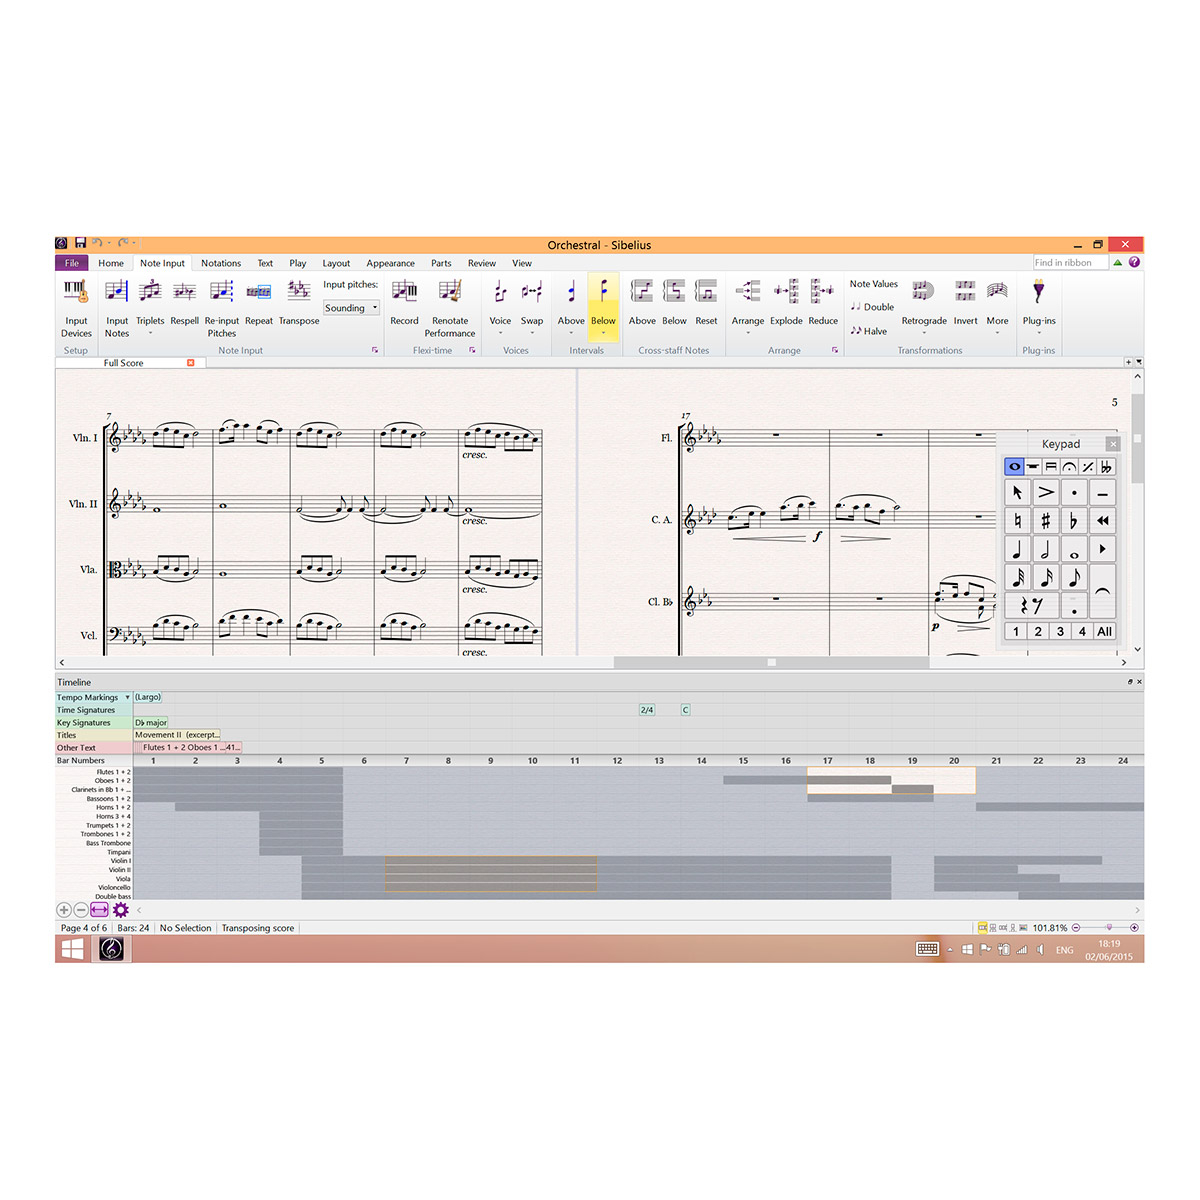 Photoscore Sibelius 8 Download Mac